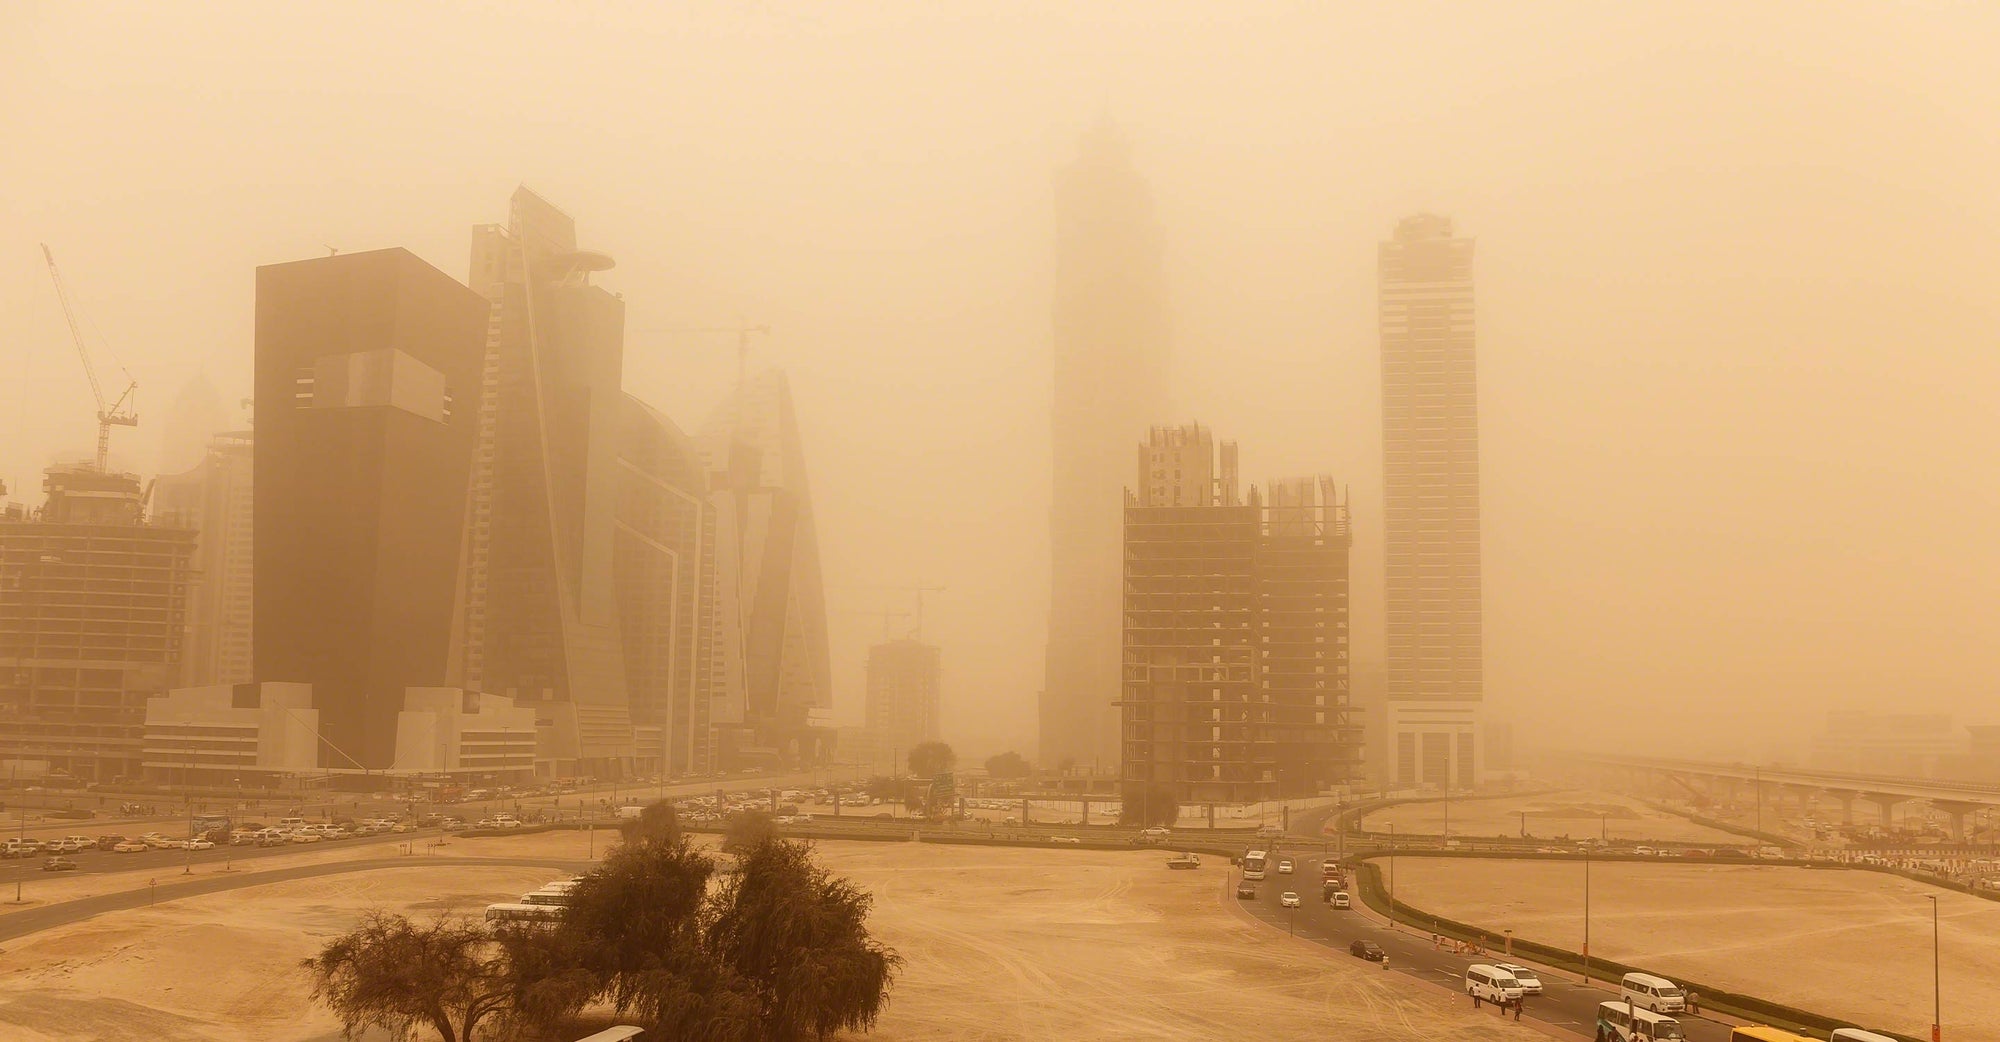 Dubai sand storm